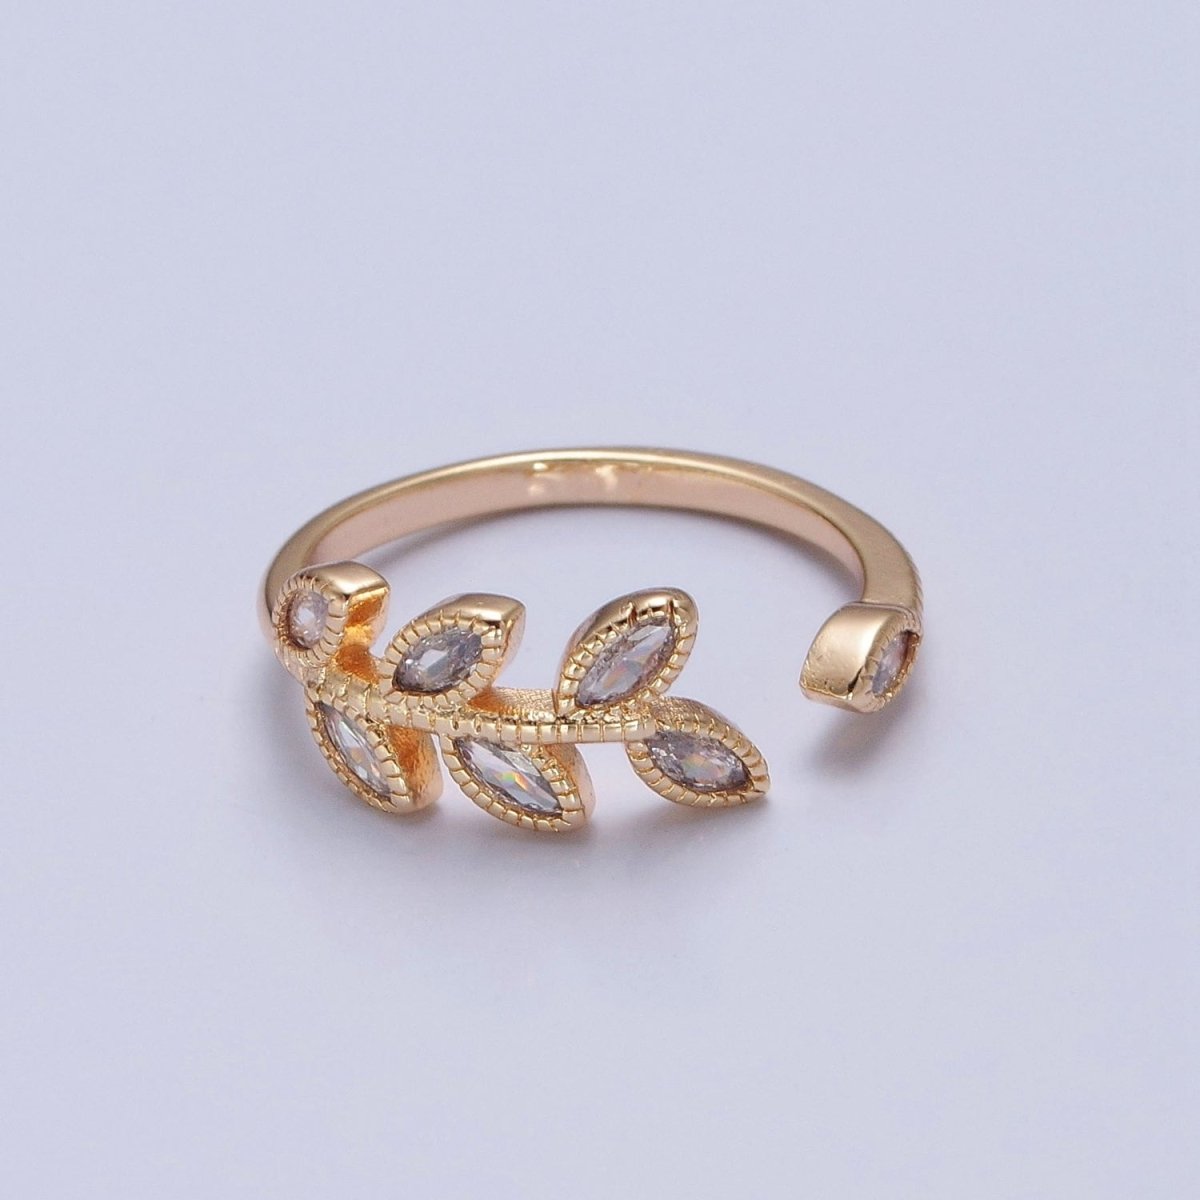 TRENDY Gold Leaf Ring, Pave Leaf Ring, Olive Leaf Vine Ring, Wraparound Ring, Nature Ring, Adjustable Size Ring O-2252 - DLUXCA